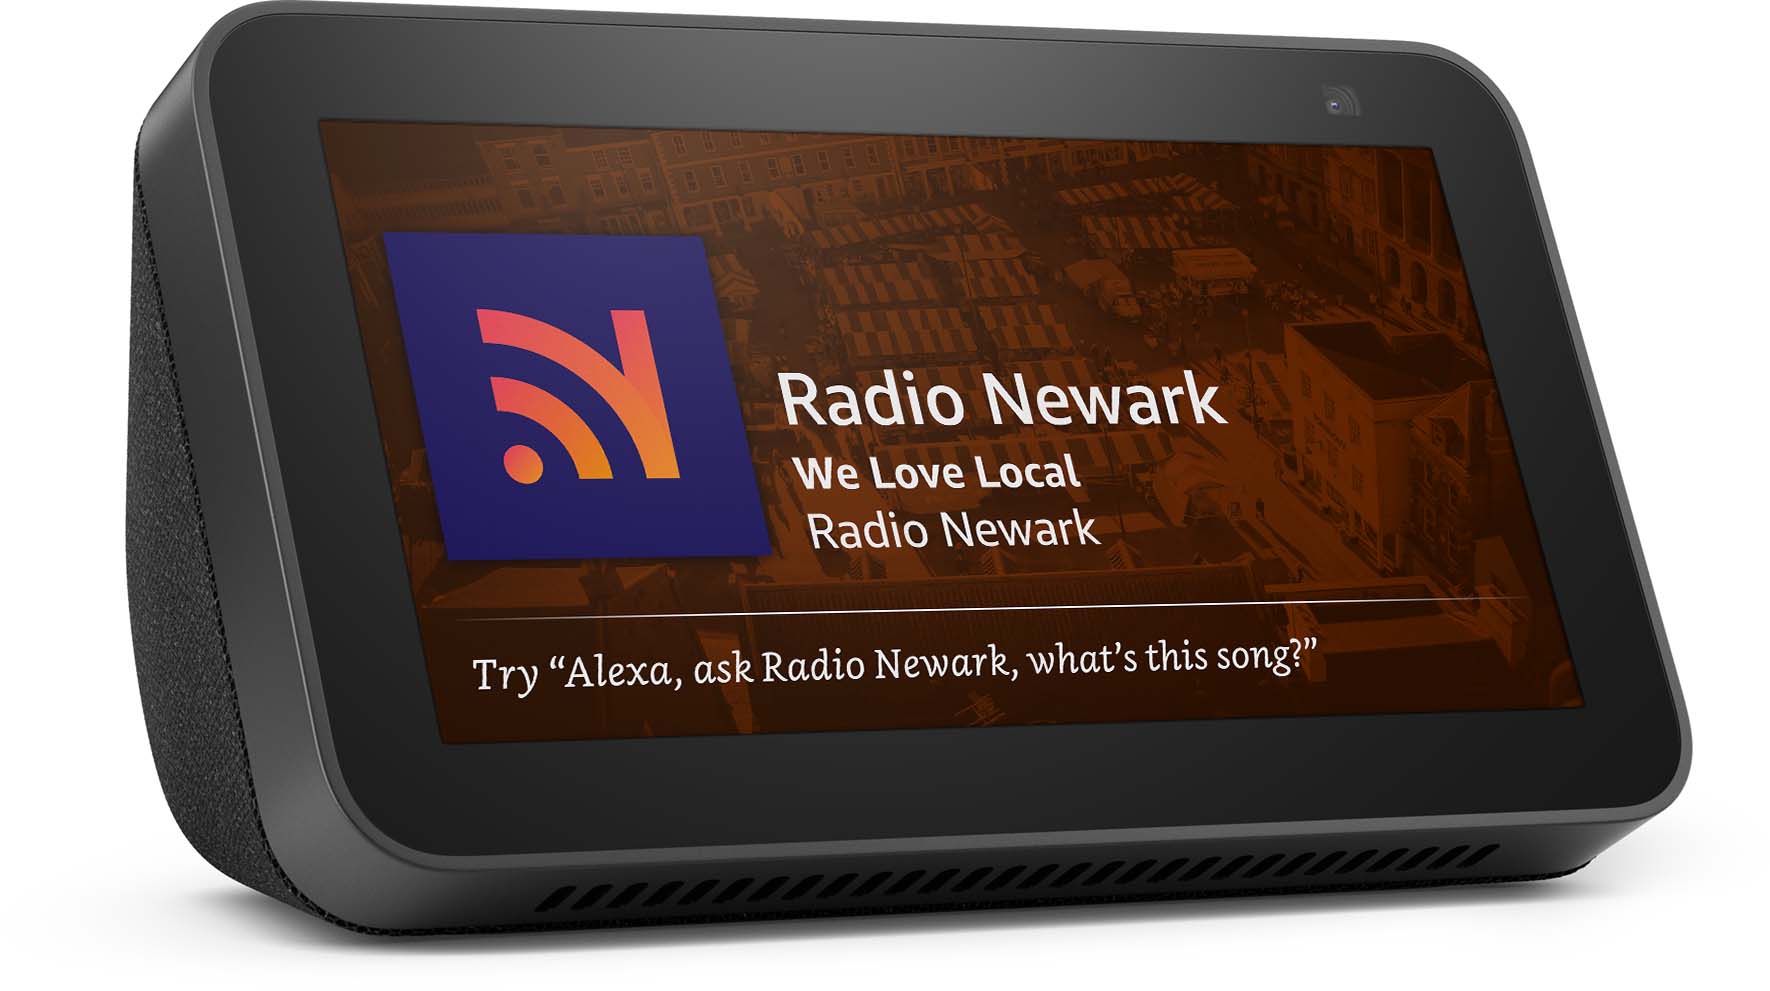 Radio Newark on an Amazon Echo Show 5